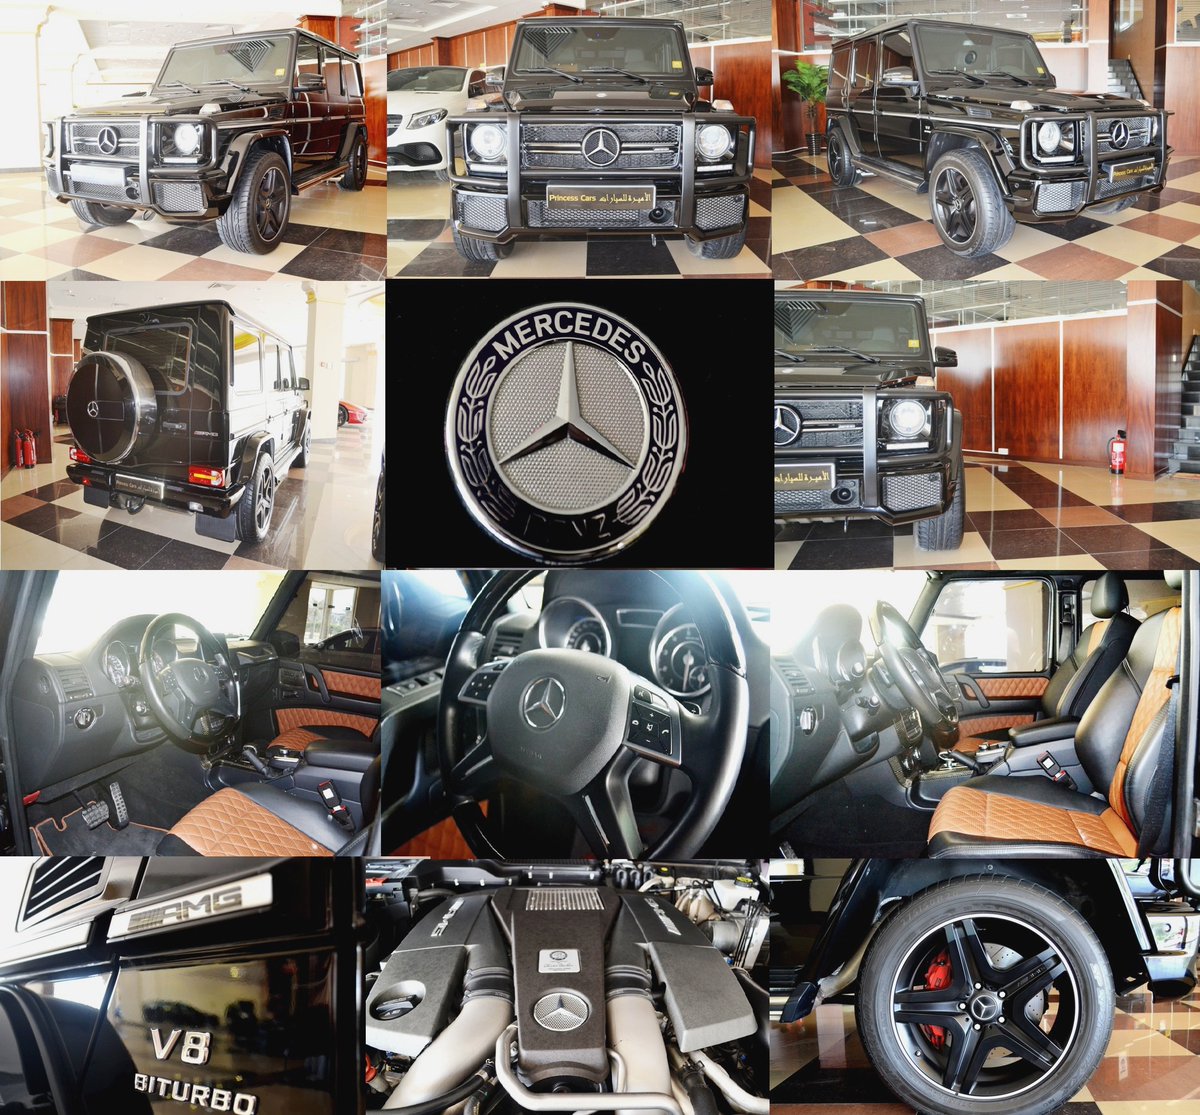 Mercedes Benz G63 2015/Gulf Spec/44,000 KM
#Princesscar #Mercedes #G63 #MercedesG63 #sportcars #Abudhabishowroom #NoLimitForLuxury